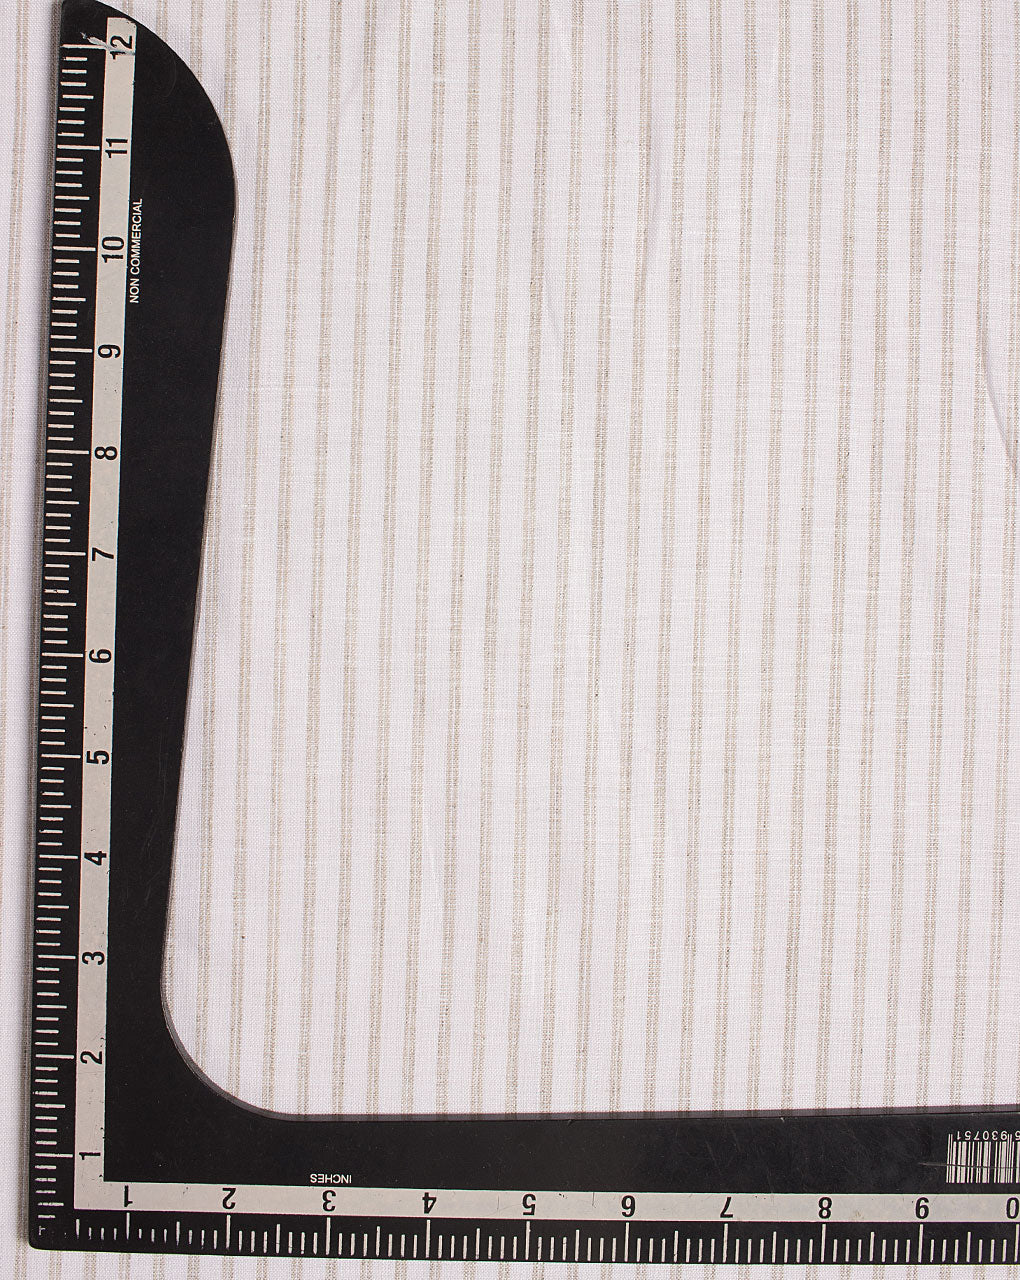 Stripes Woven Hemp Fabric ( Width 58 Inch ) - Fabriclore.com